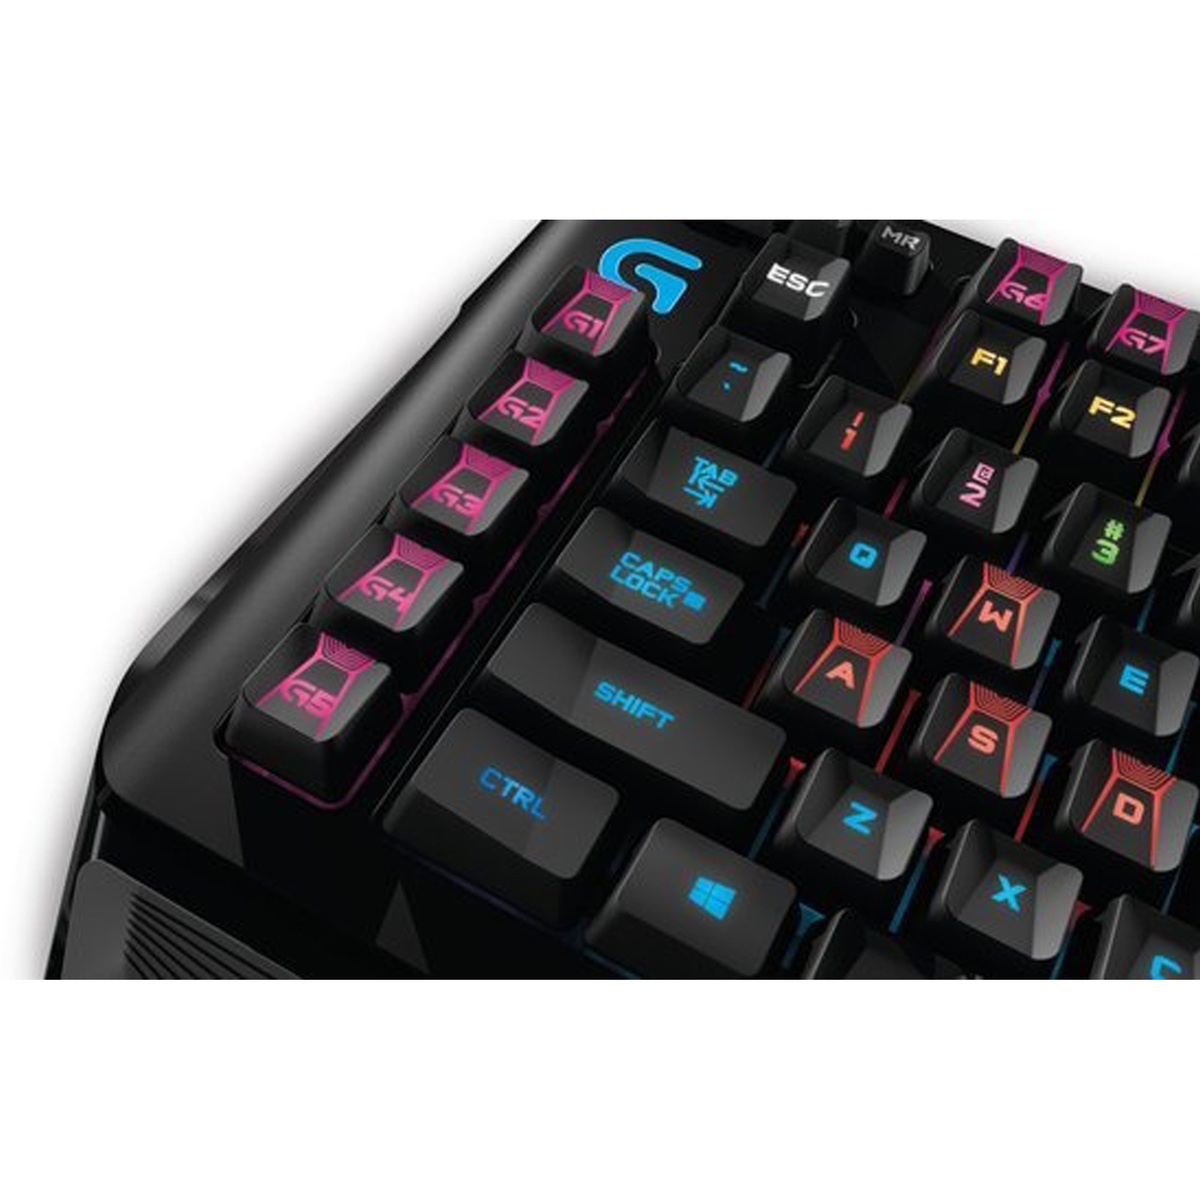 Logitech Orion Spark RGB Gaming Keyboard, Black, G910